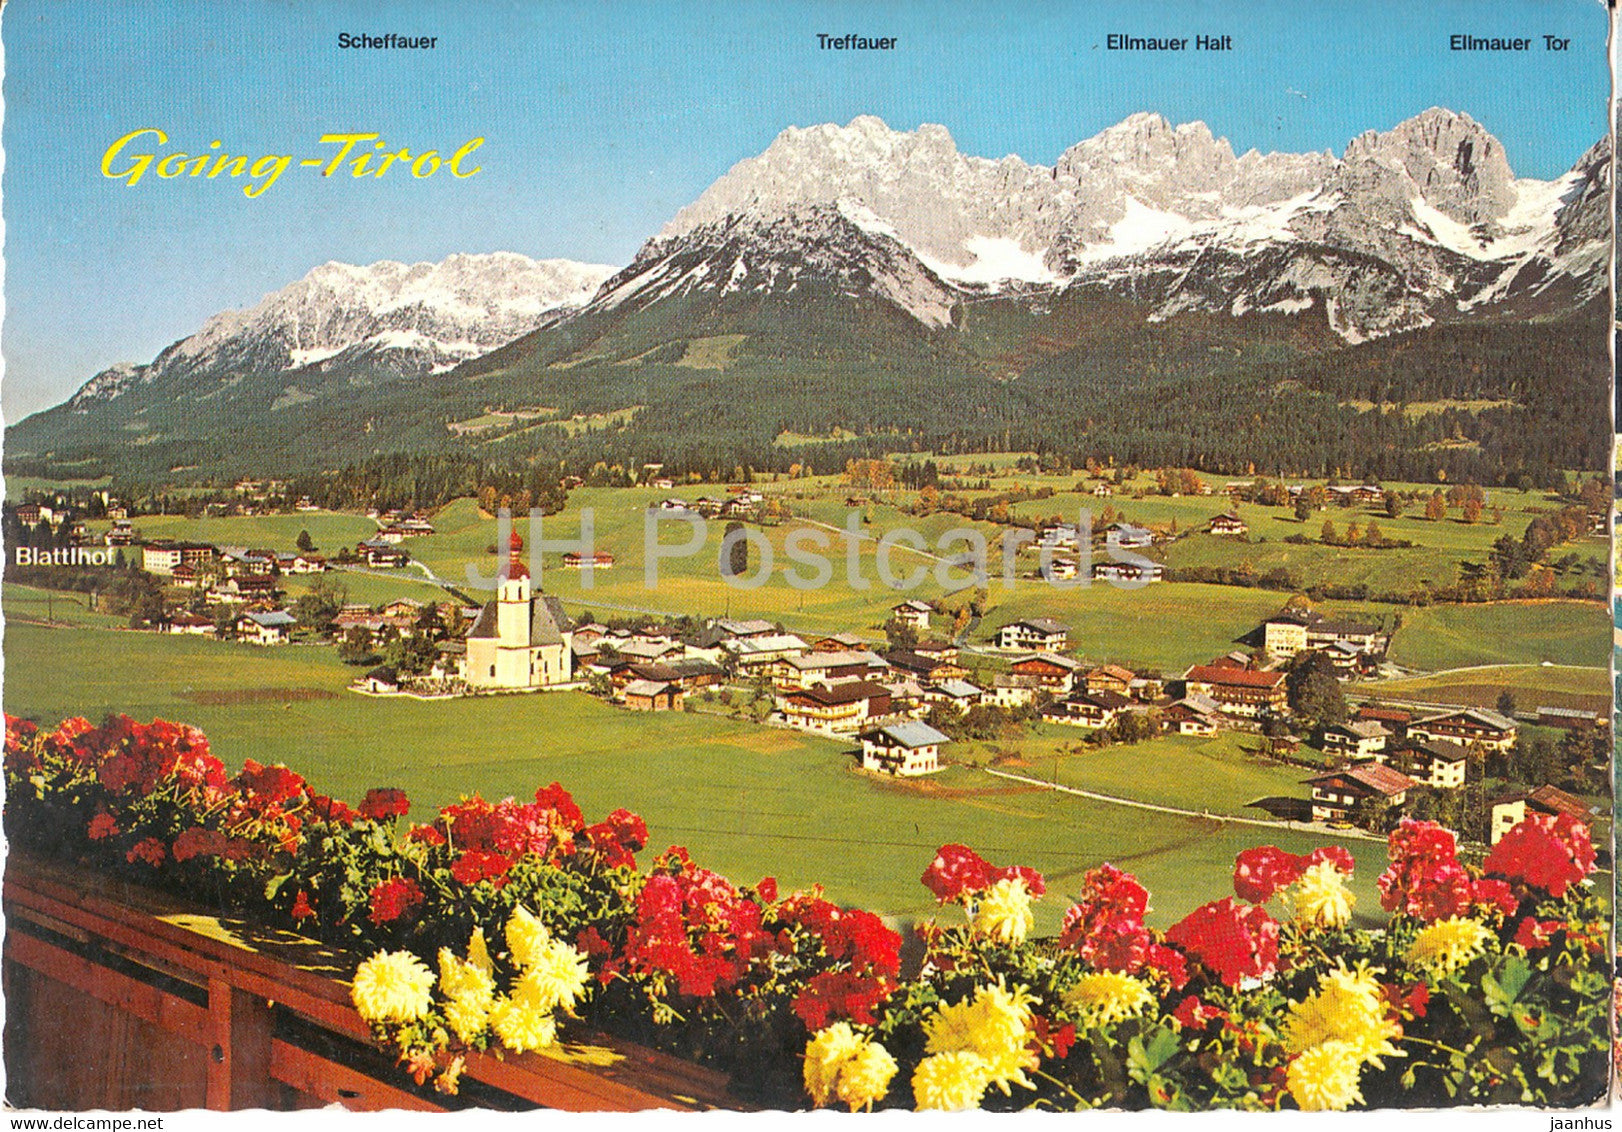 Going am Wilden Kaiser - Tirol - Malerisches Tirolerland - Austria - used - JH Postcards